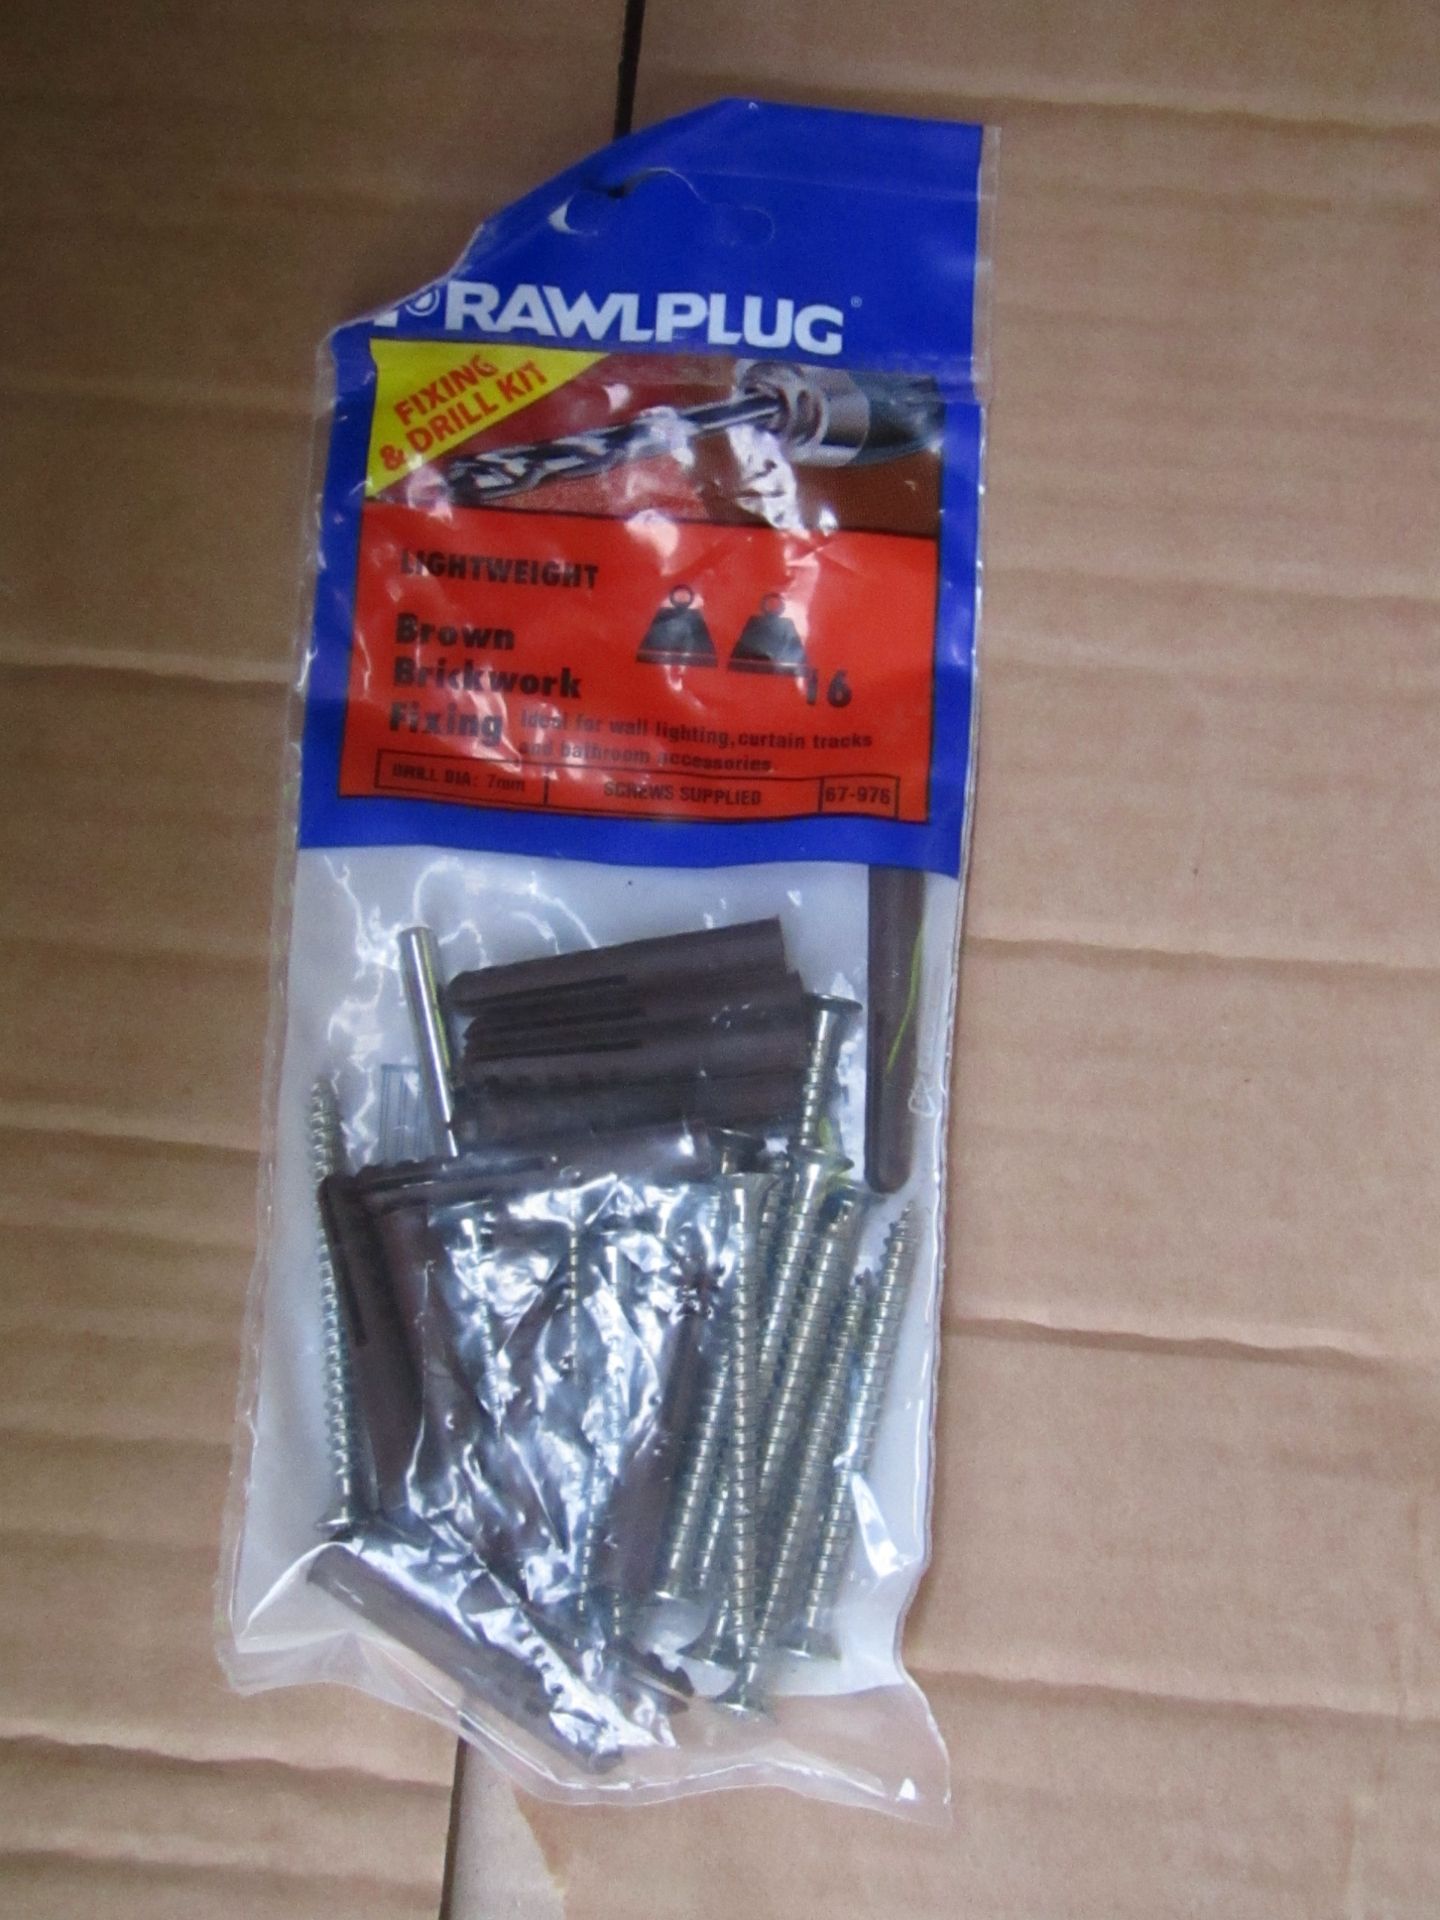 5x Packs of 16 Rawlplug Brown Brick work fixings with Drill Bit and Screws